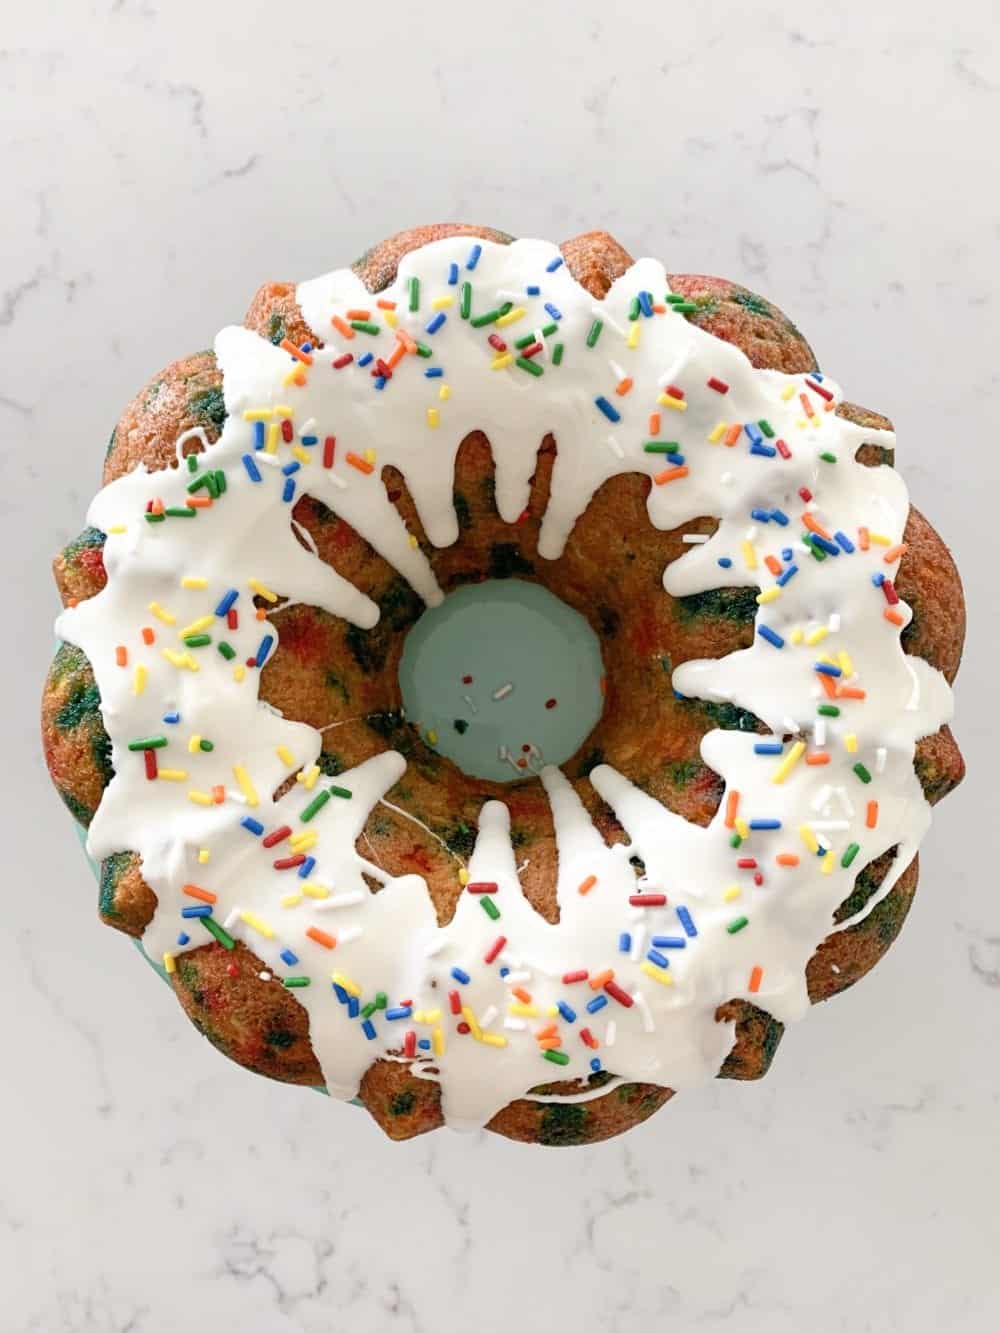 The Best Homemade Funfetti Bundt Cake